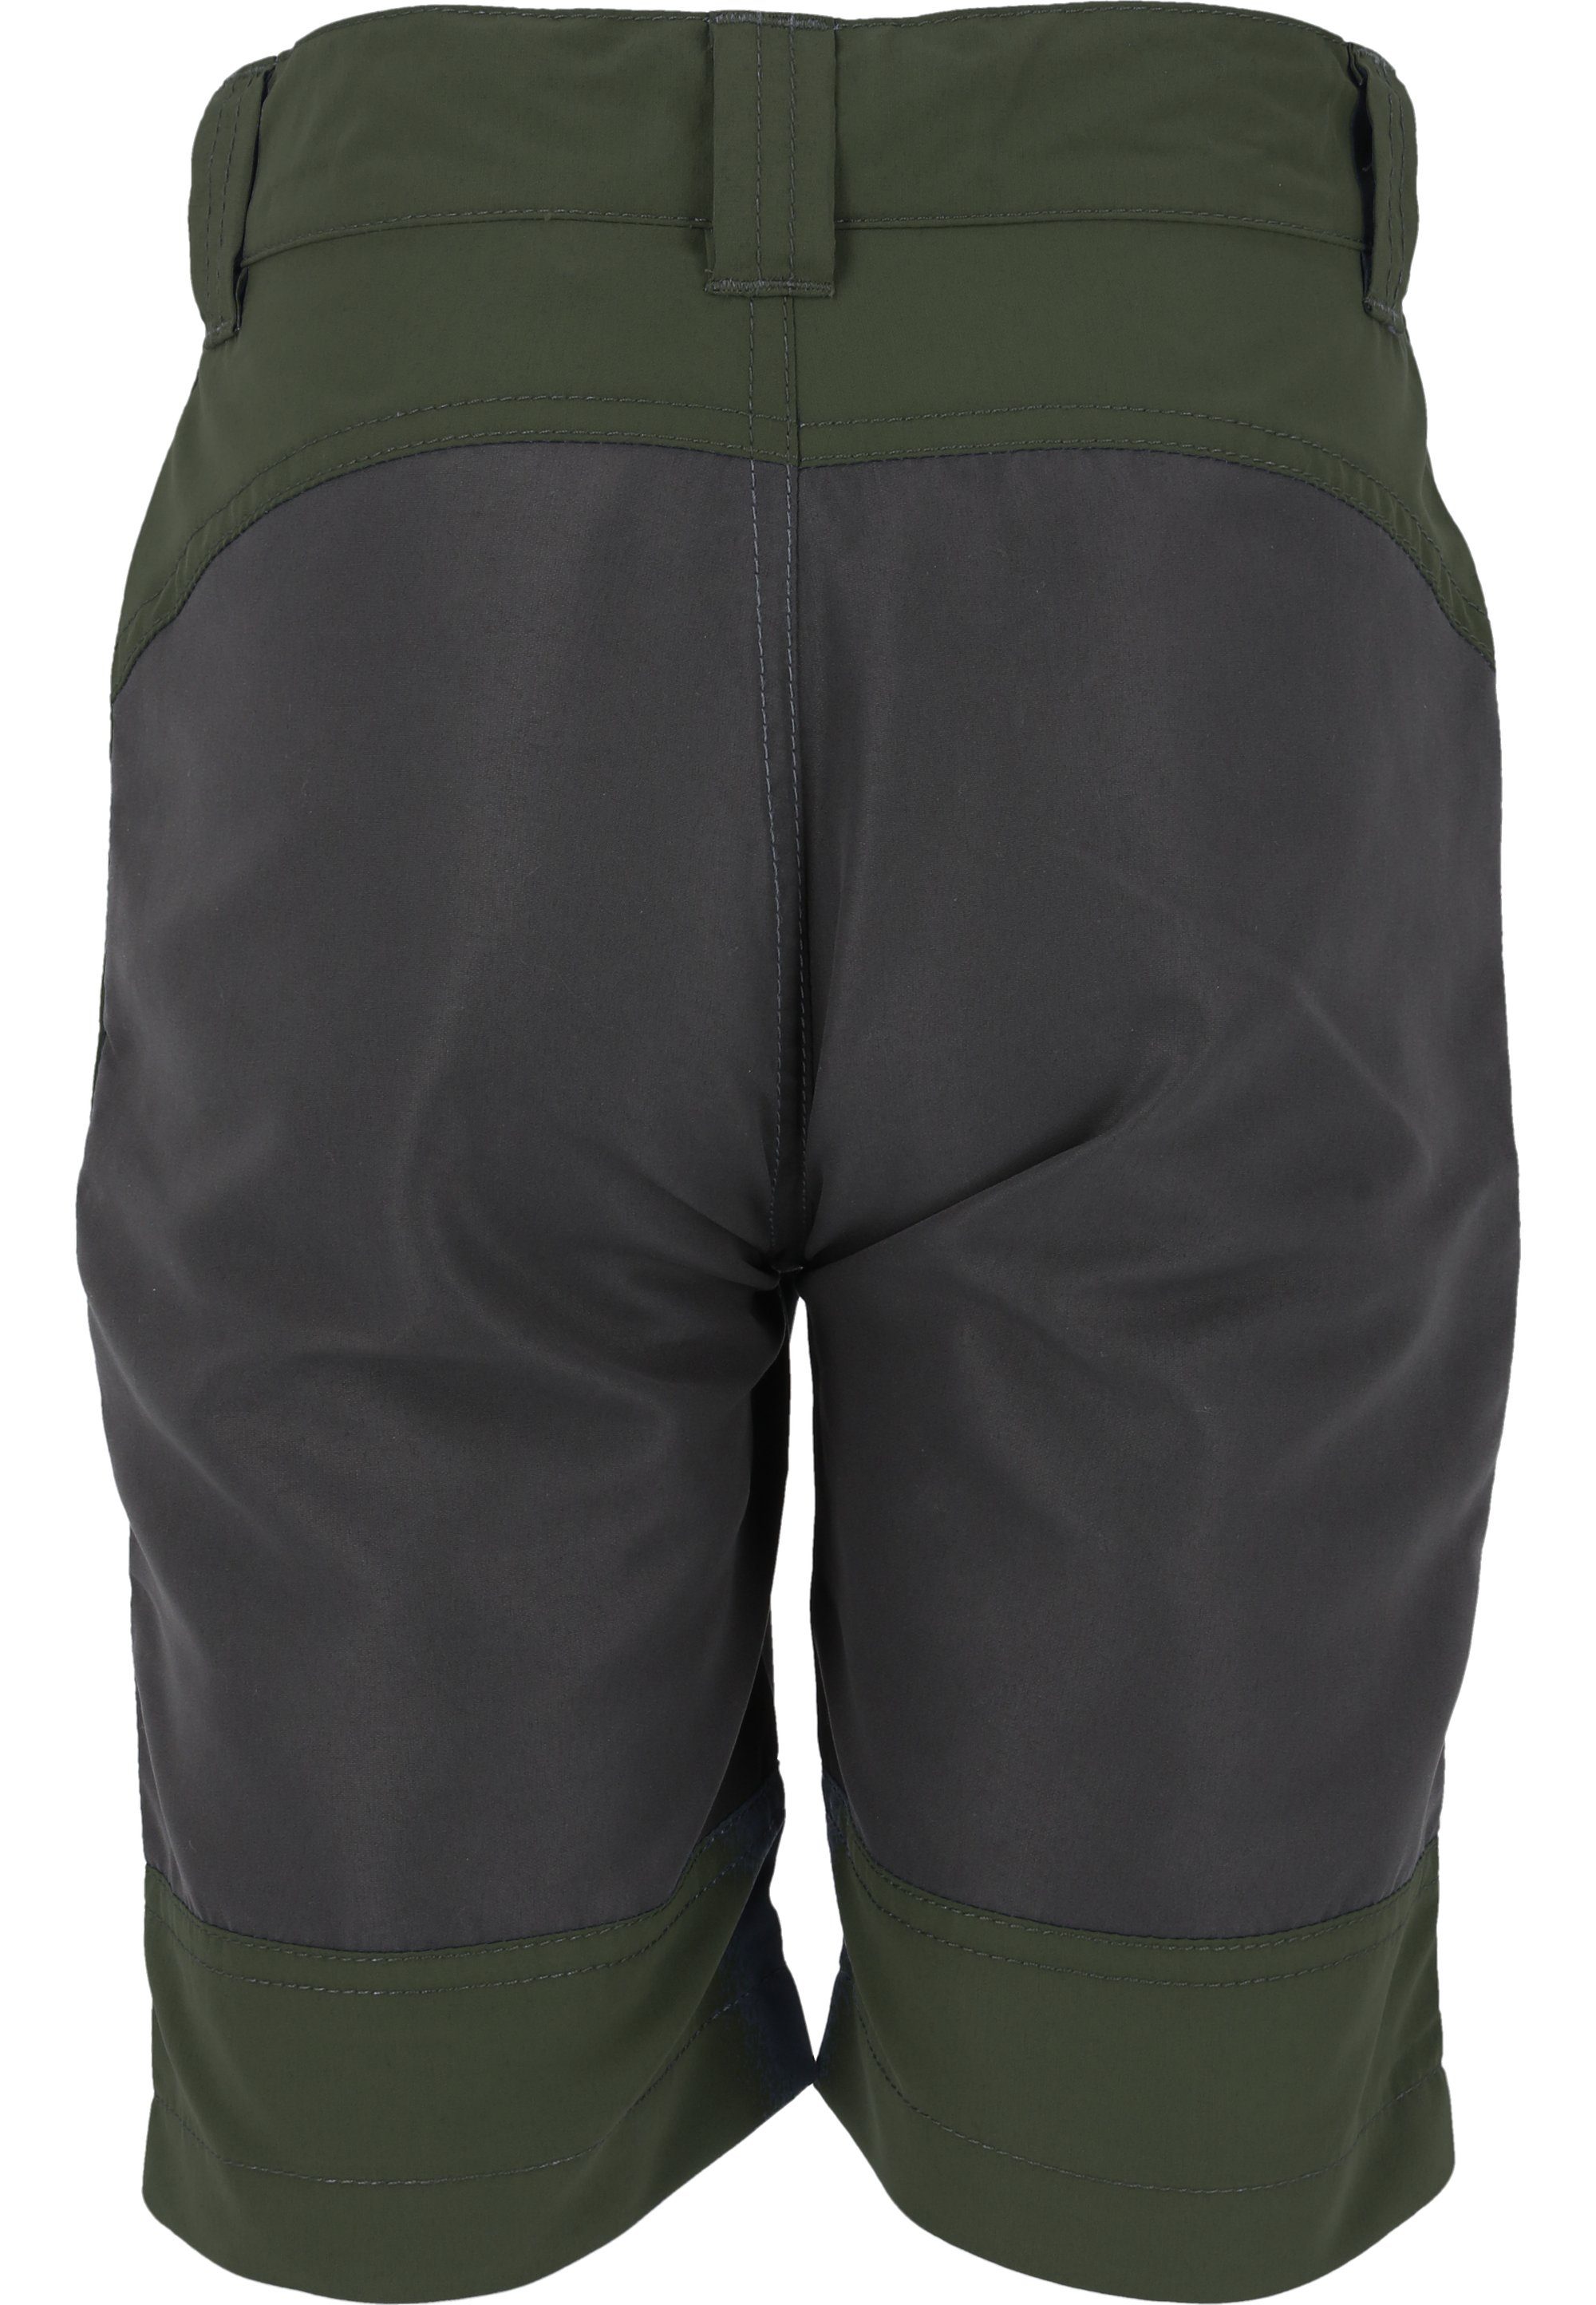 Shorts olivgrün-schwarz aus robustem Material Atlantic ZIGZAG